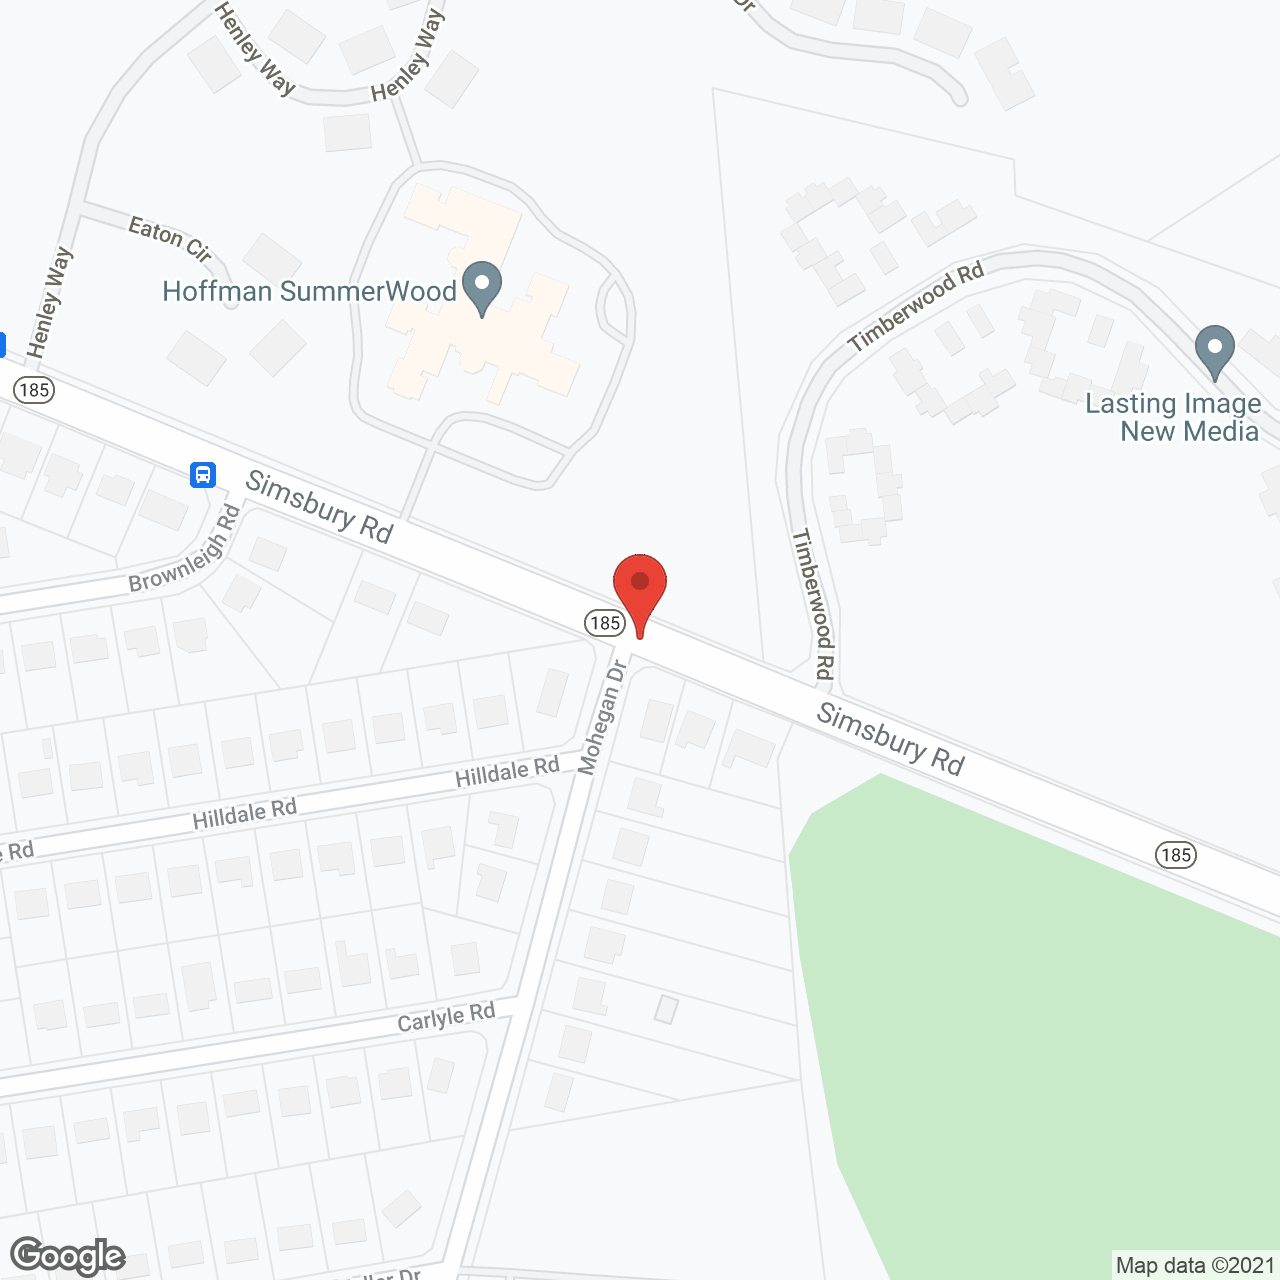 Hoffman Summerwood Community in google map